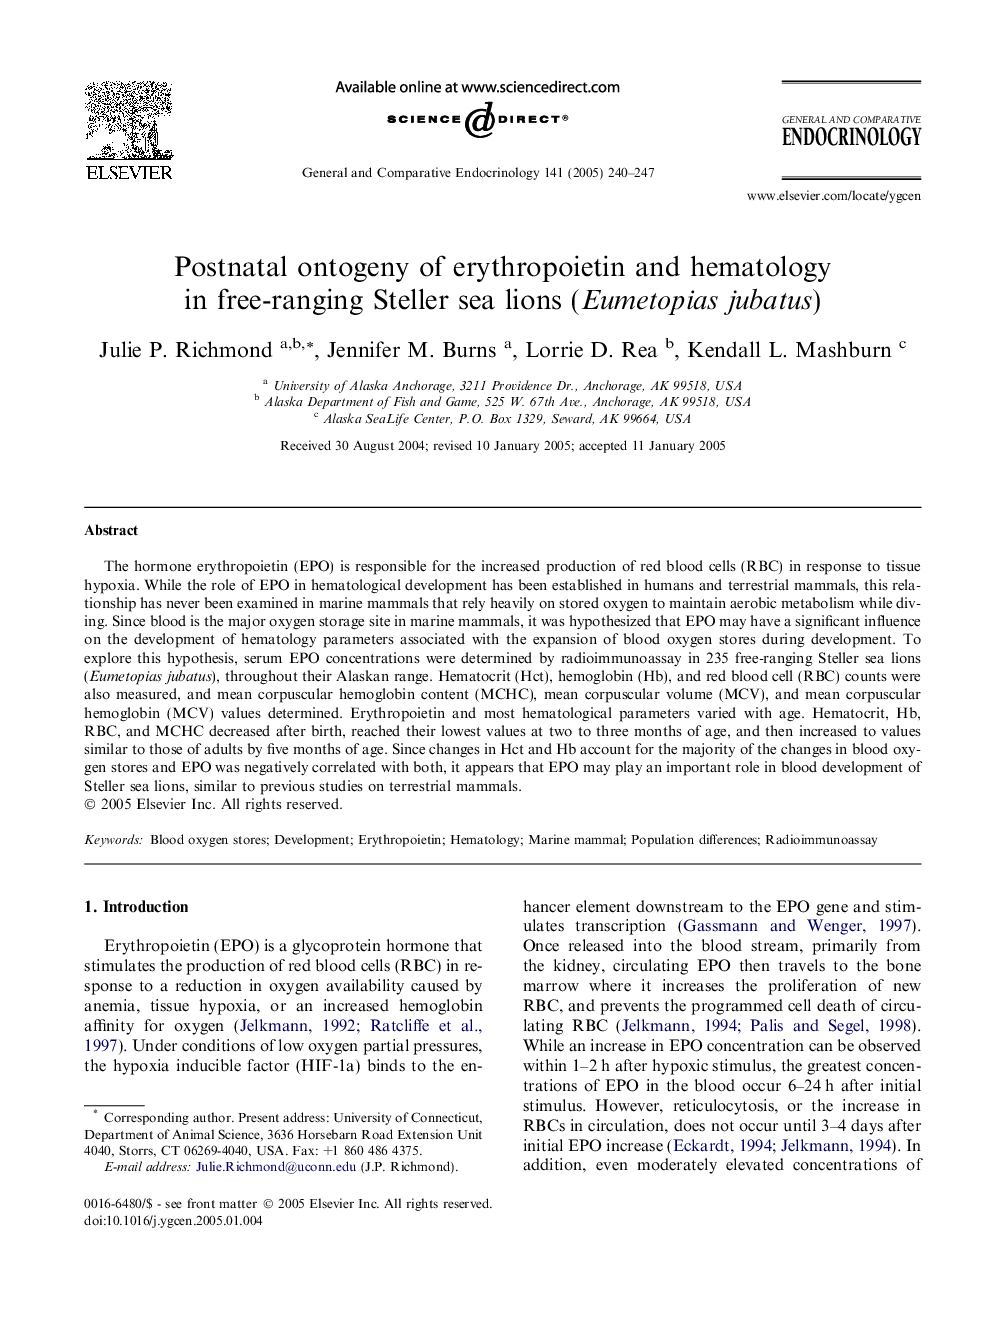 Postnatal ontogeny of erythropoietin and hematology in free-ranging Steller sea lions (Eumetopias jubatus)